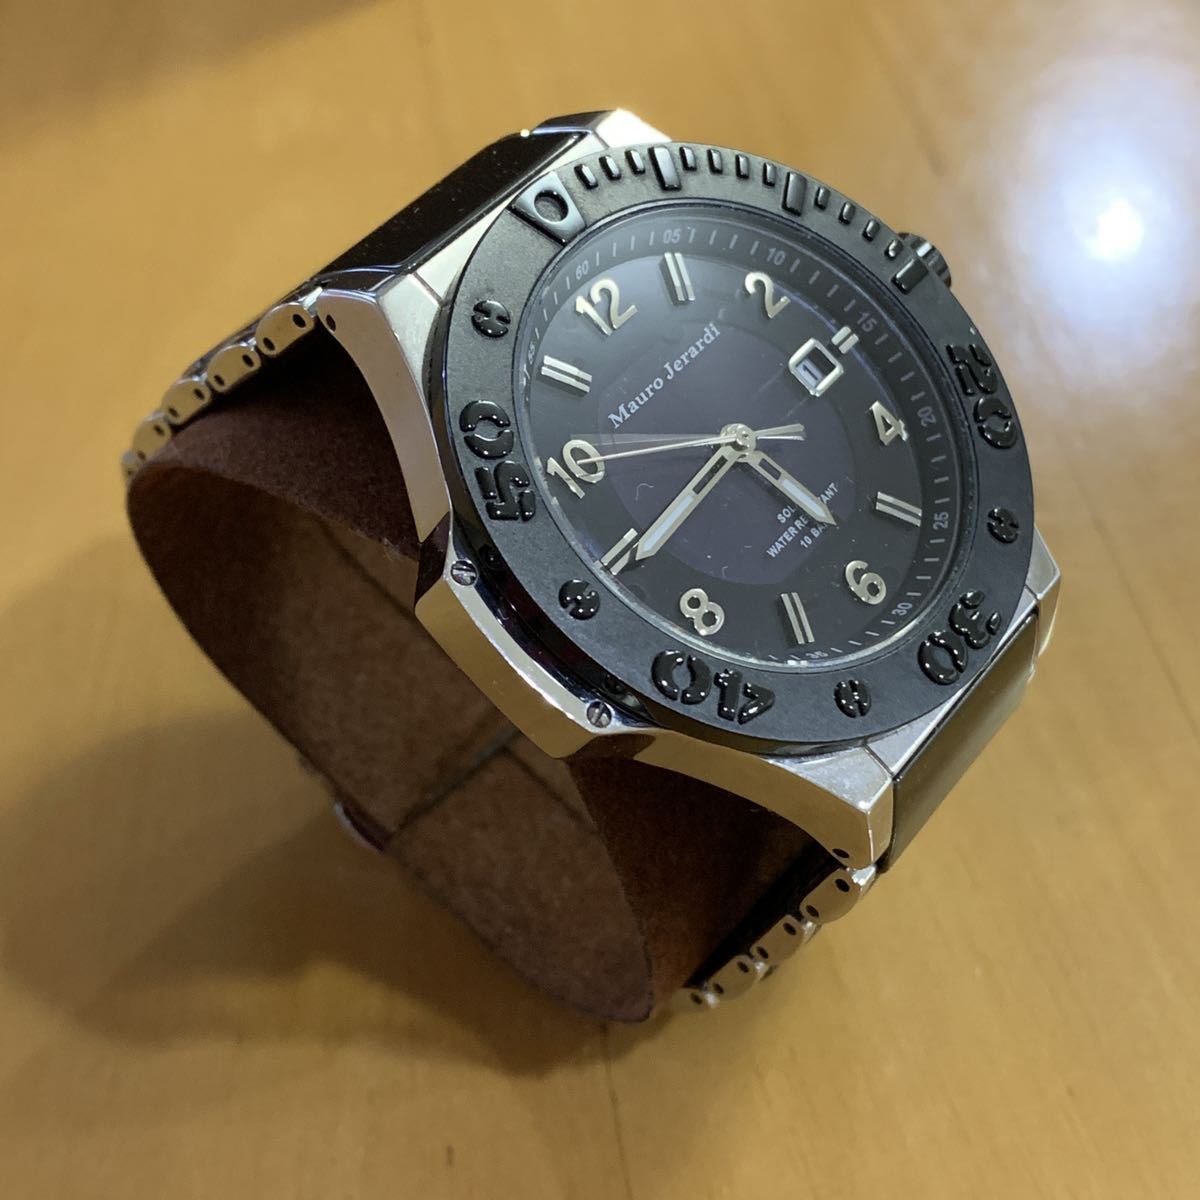 mauro jerardi mj034 メンズ 腕時計 ソーラーウォッチ 10気圧防水 カレンダー セラミック ブラック シルバー_画像3